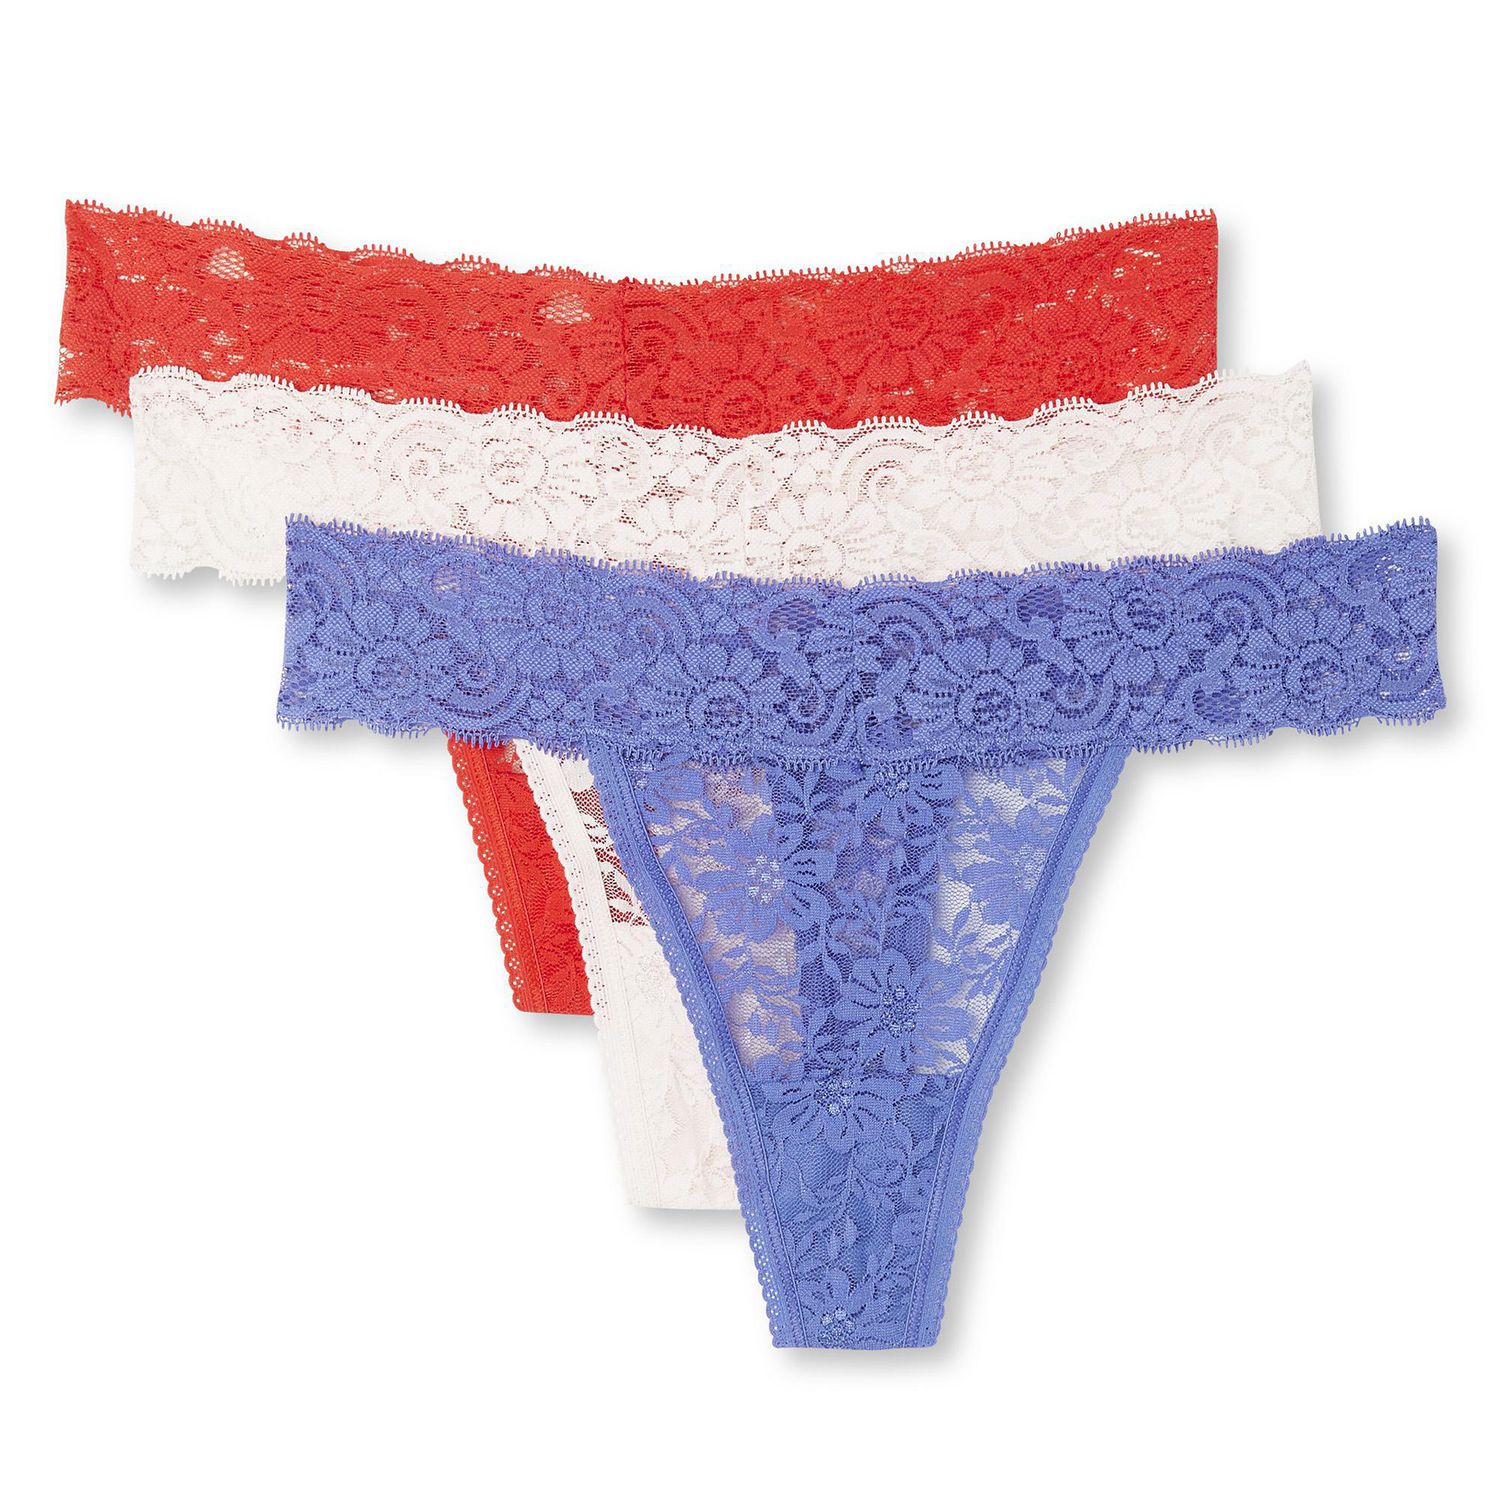 ℕ.ℕ, 3pcs/Set Women's Lace Trim Thong Panties With Slogan Print